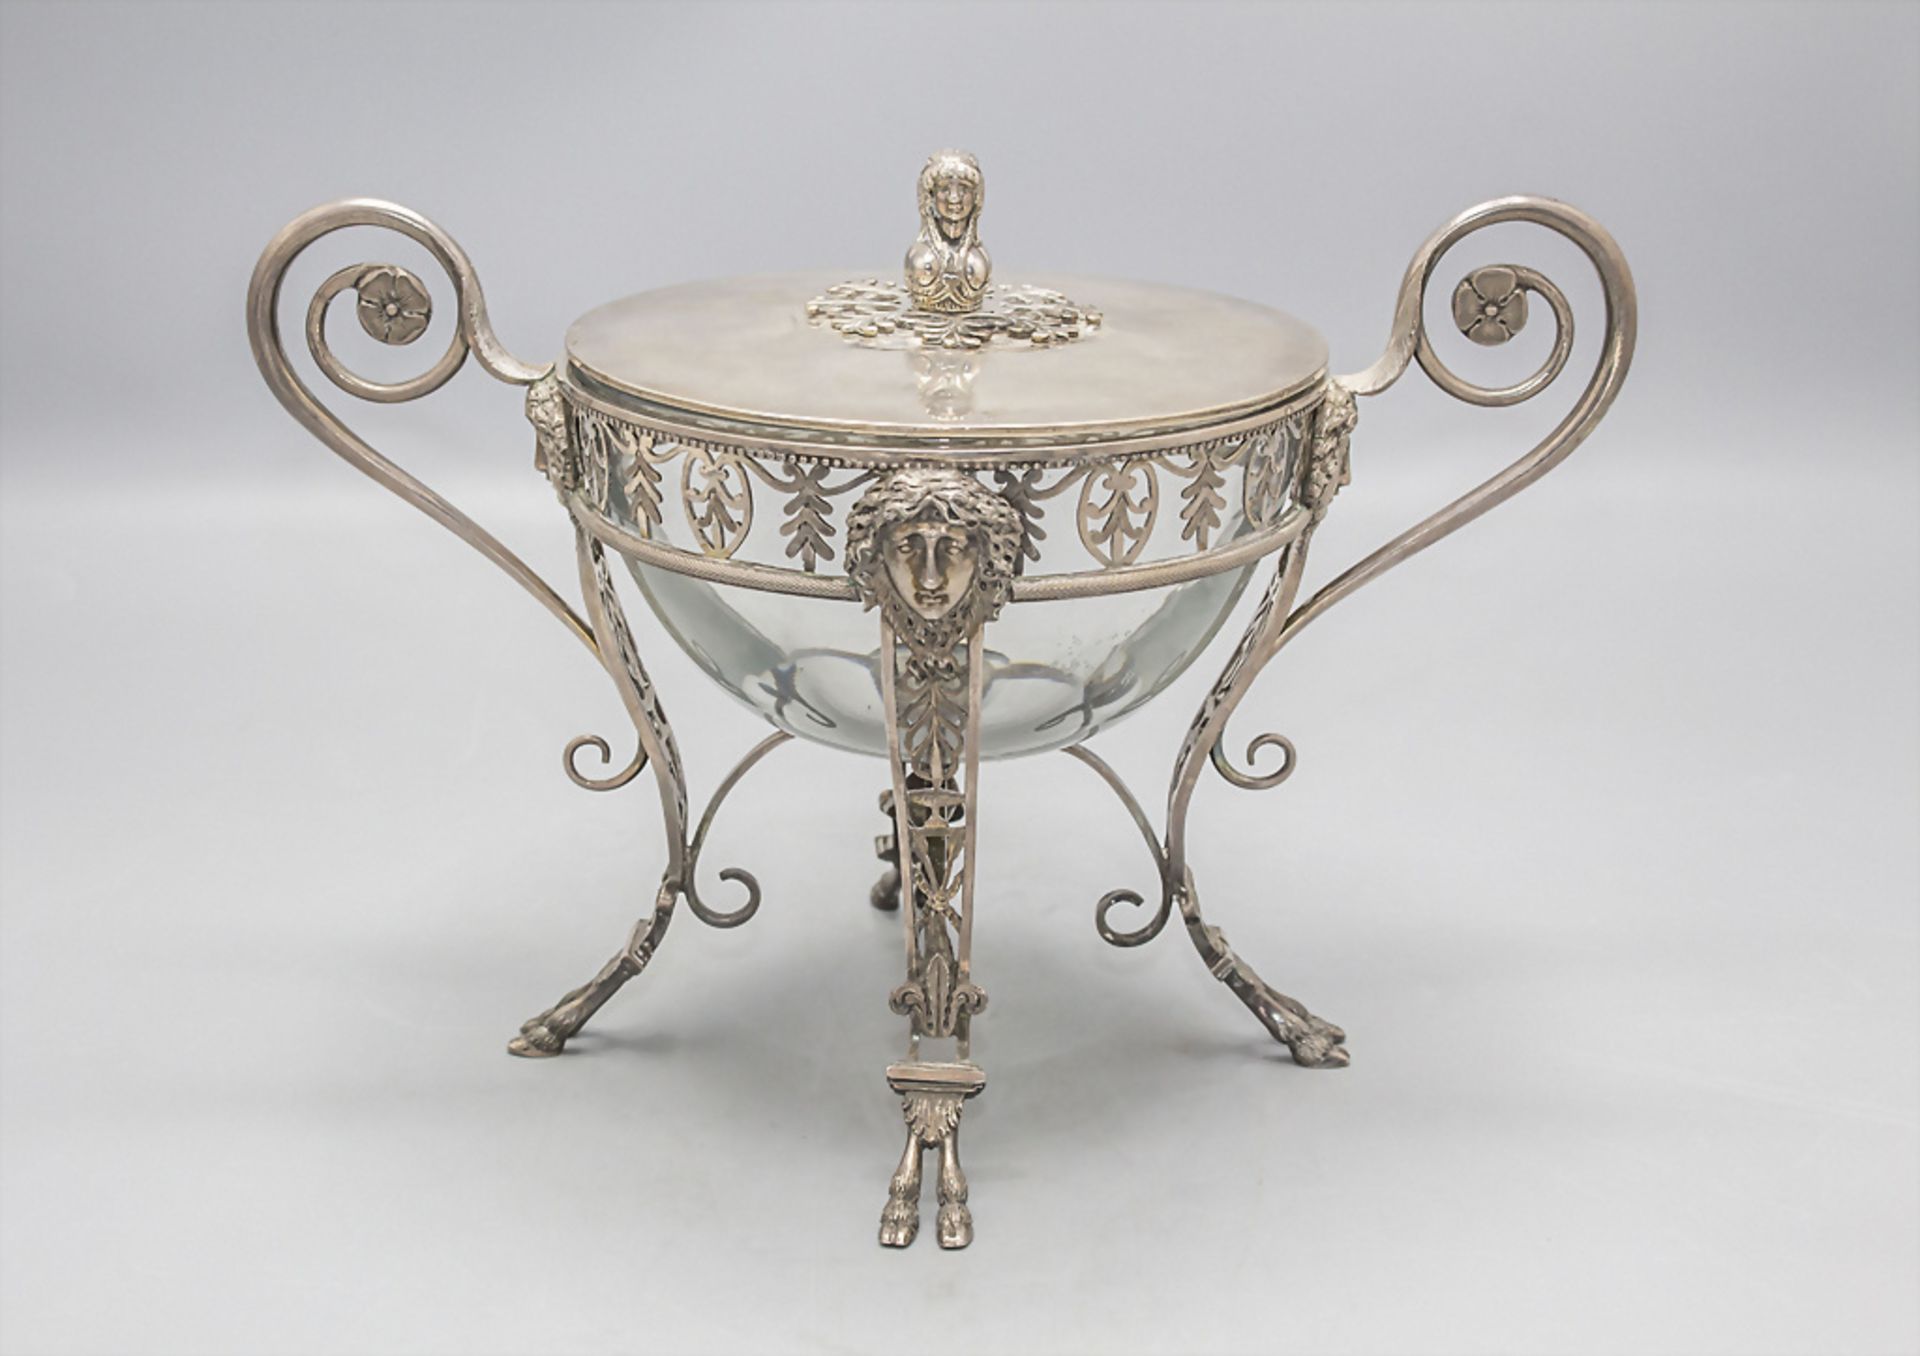 Empire Bonbonniere / An Empire silver candy bowl with lid, Paris, 1798-1809